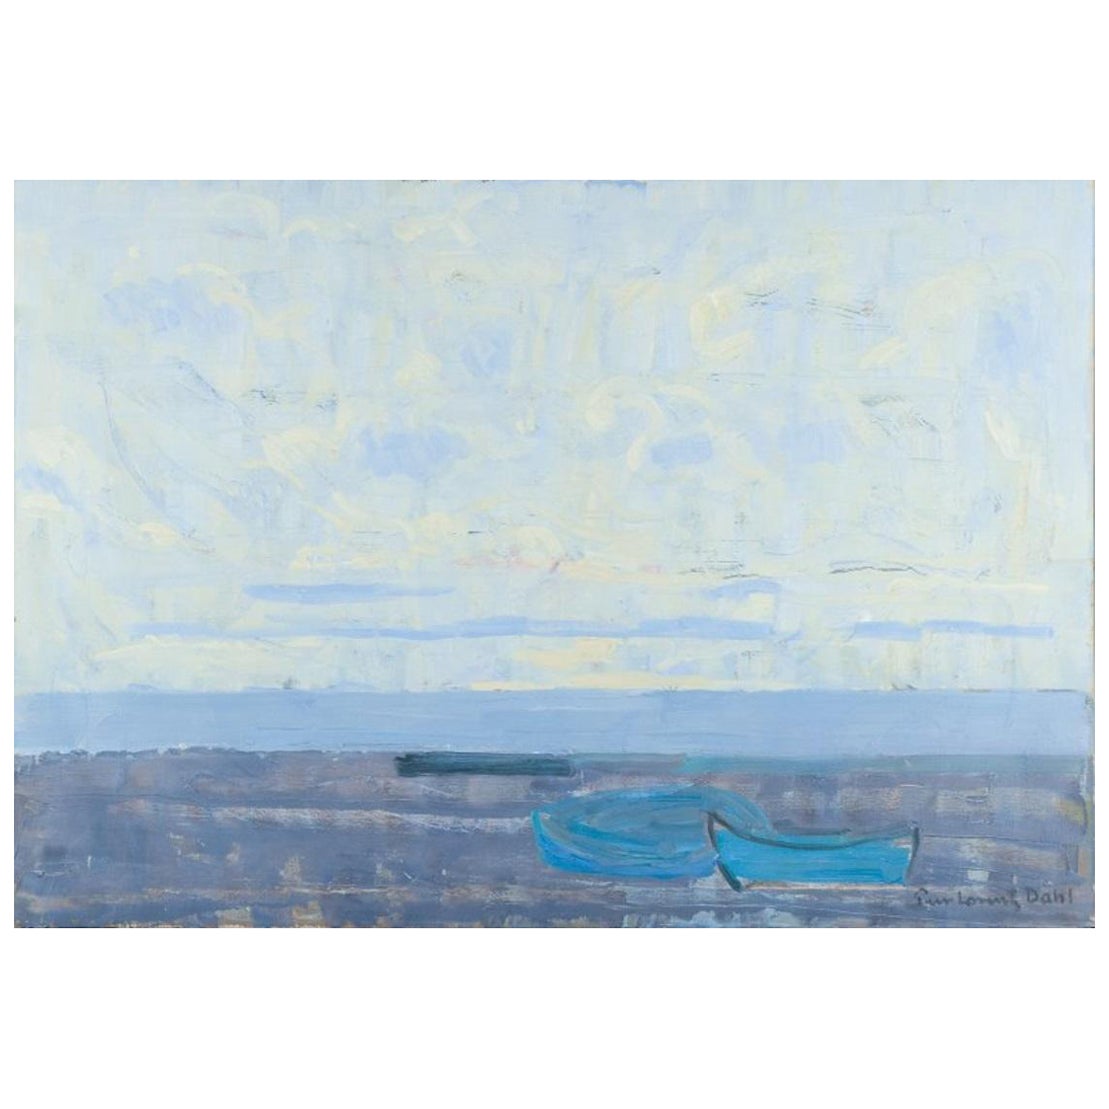 Peer Lorentz Dahl, Norwegian artist. Oil on canvas. Modernist beach view